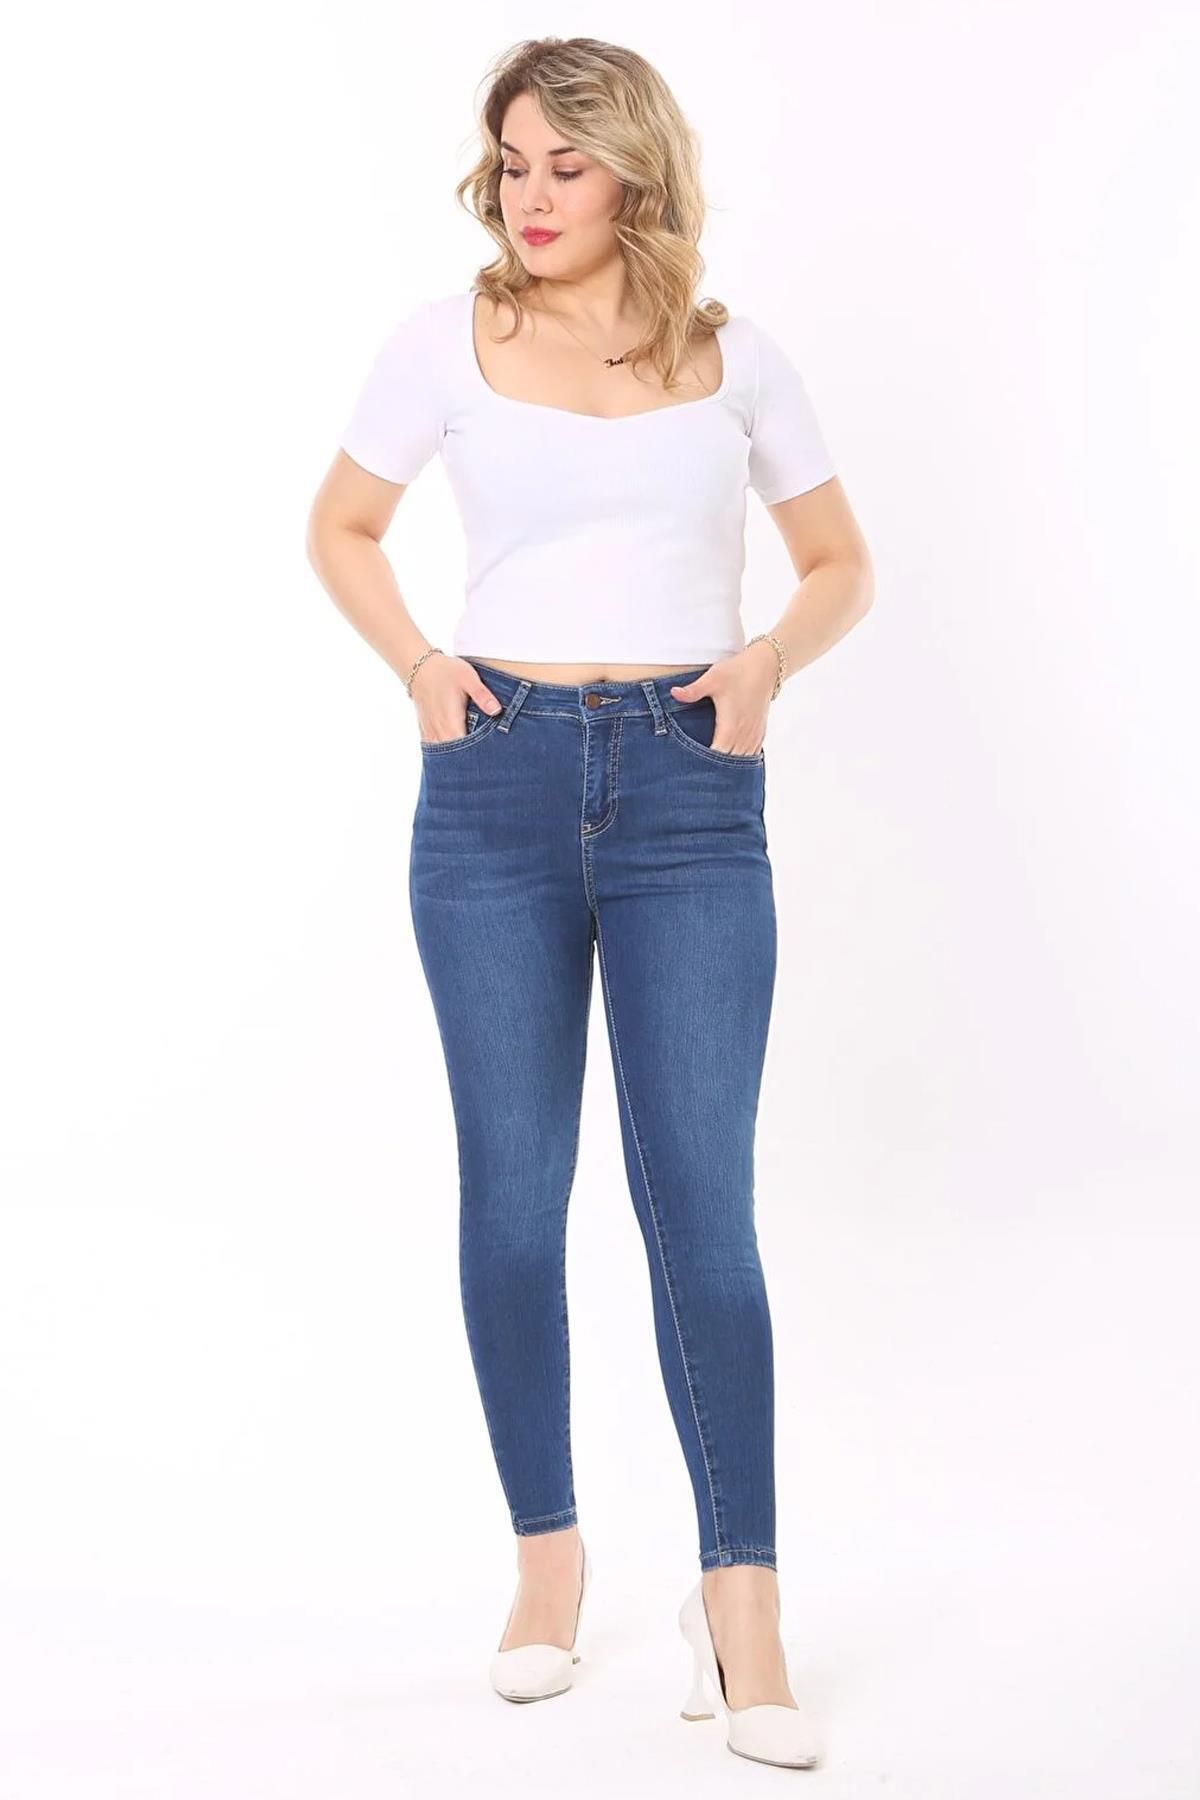 CEDY DENIM Kadın Mavi Yüksek Bel Dar Paça Süper Skinny Fit Esnek Bilek Boy Denim Jean Kot Pantolon C596